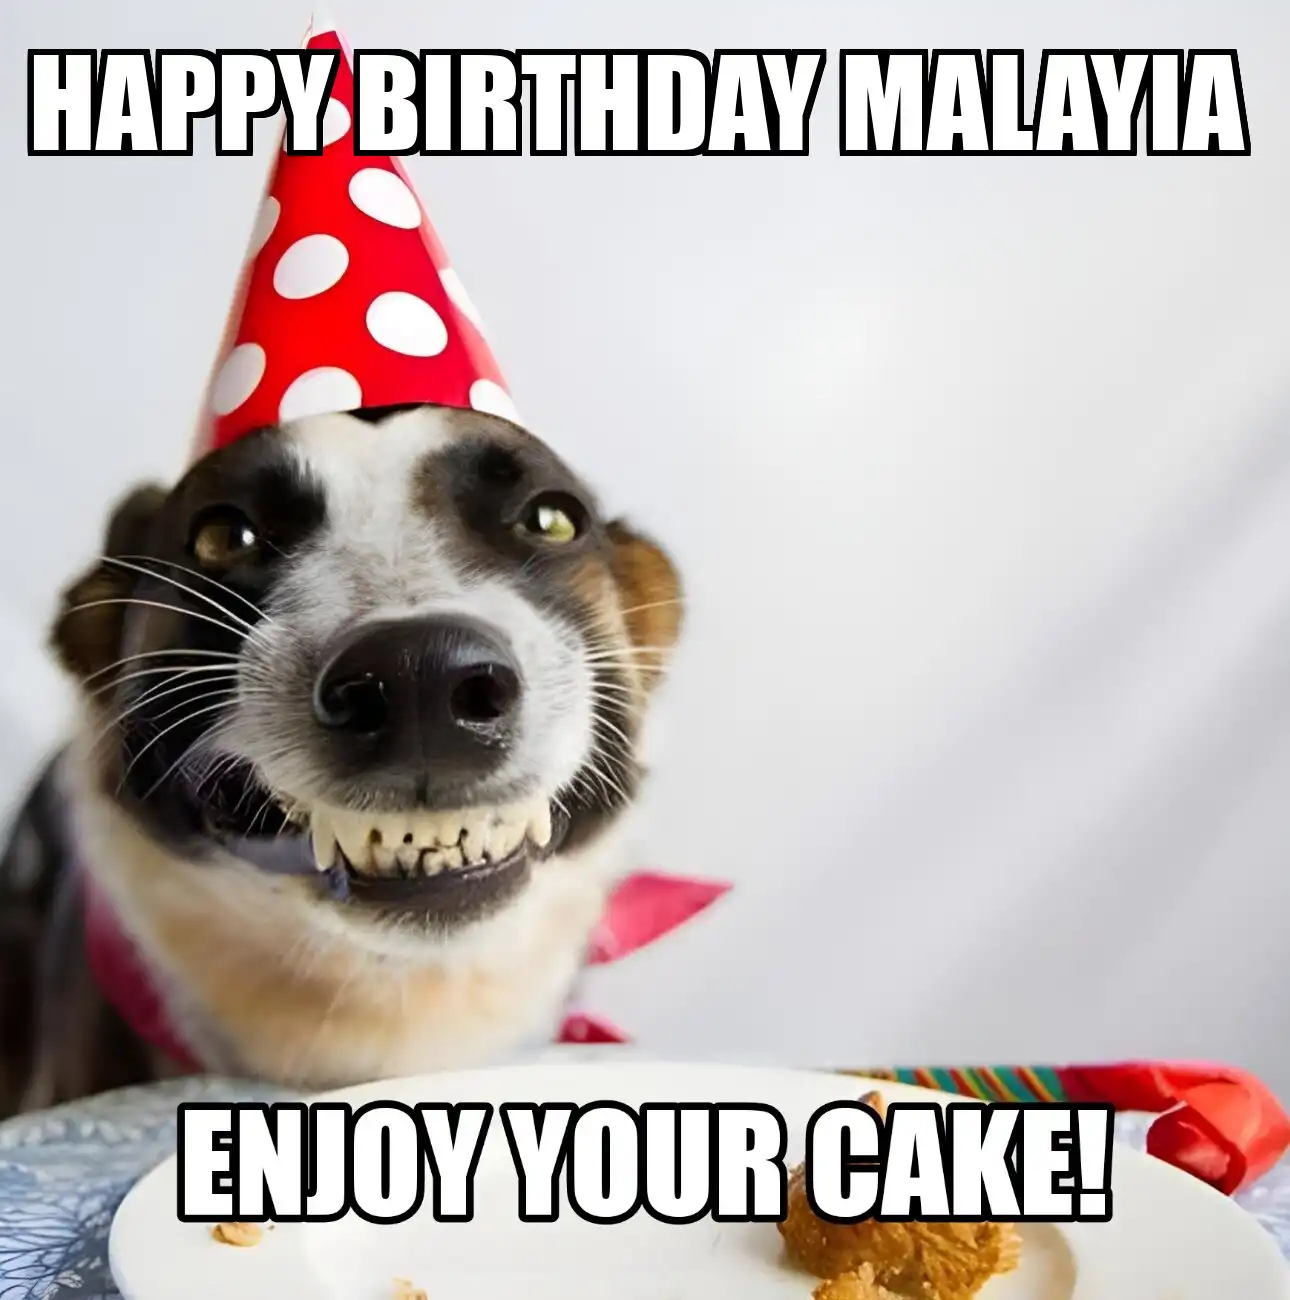 Happy Birthday Malayia Enjoy Your Cake Dog Meme